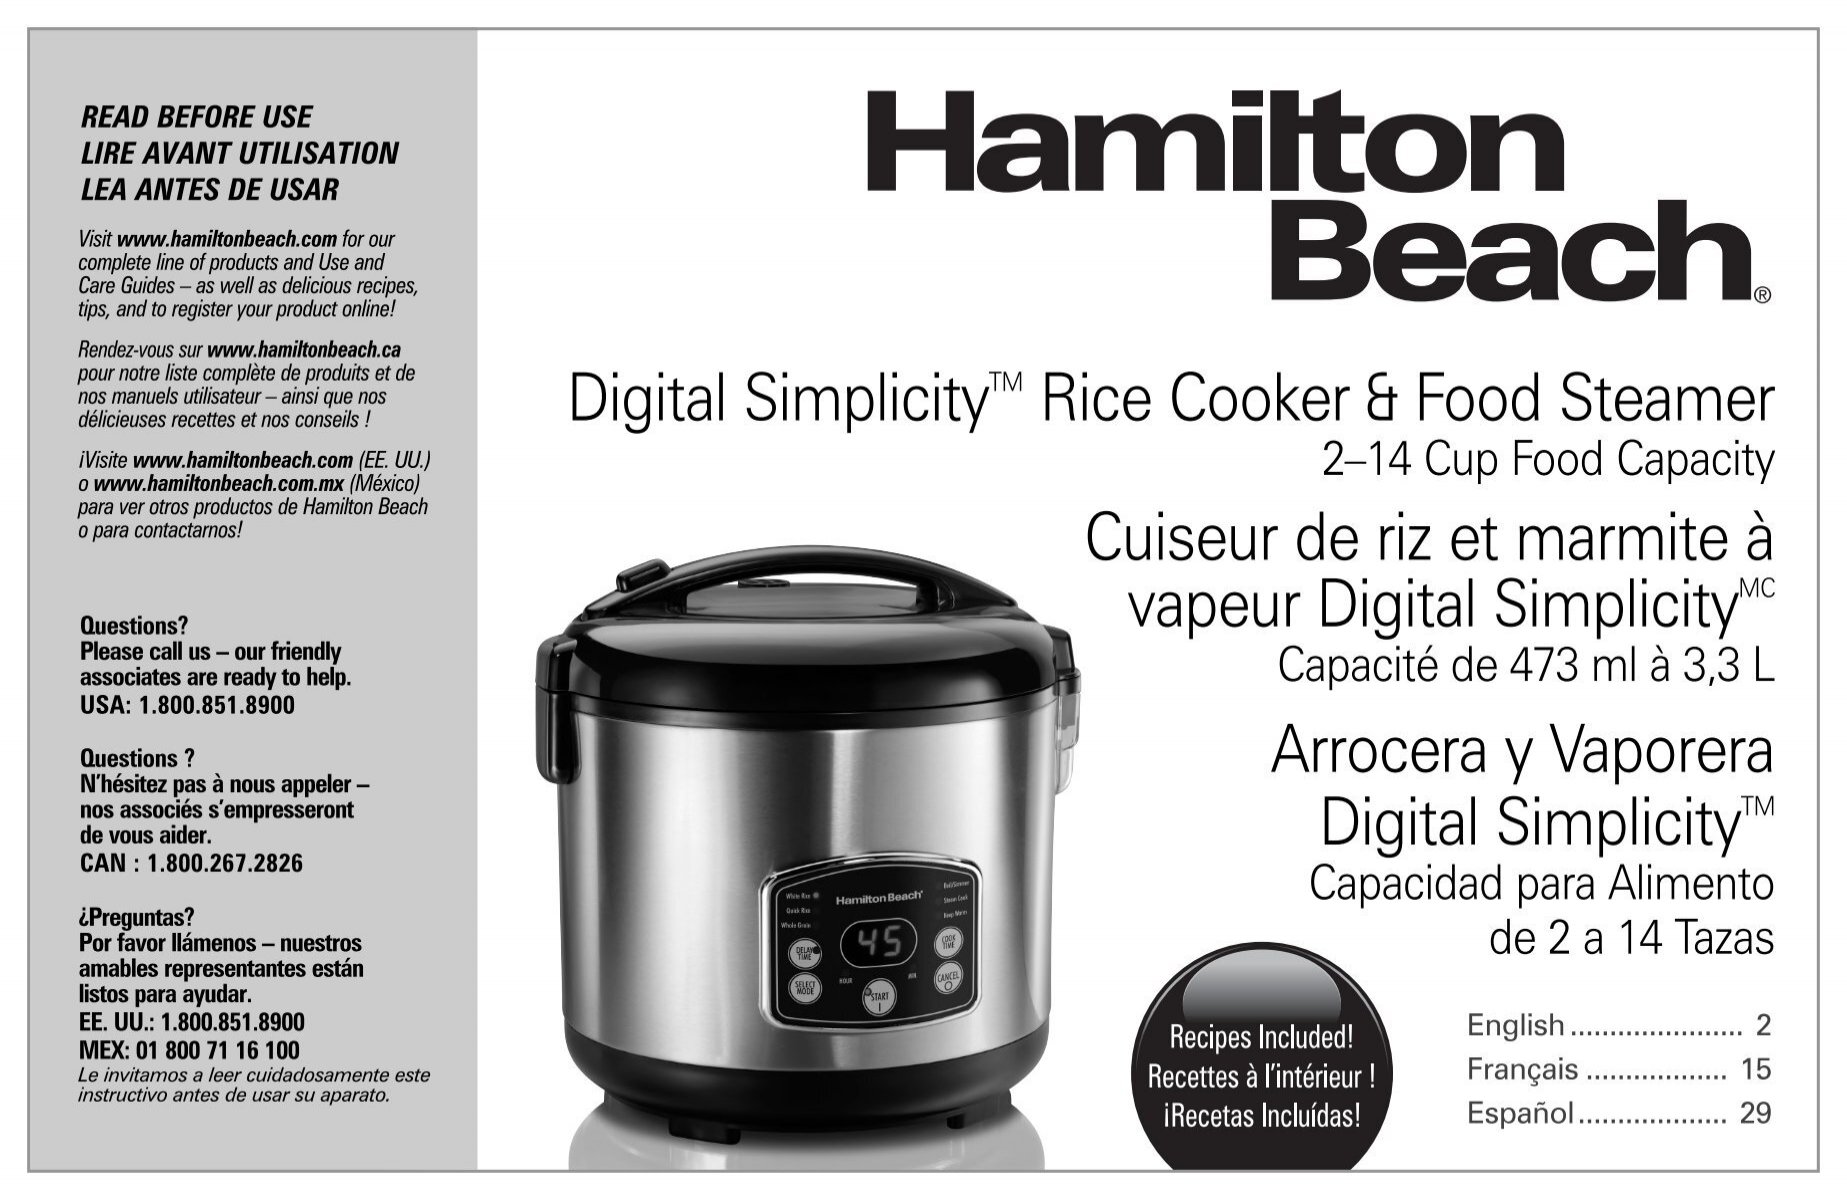 Hamilton Beach 14 Cup Digital Simplicity Rice Cooker